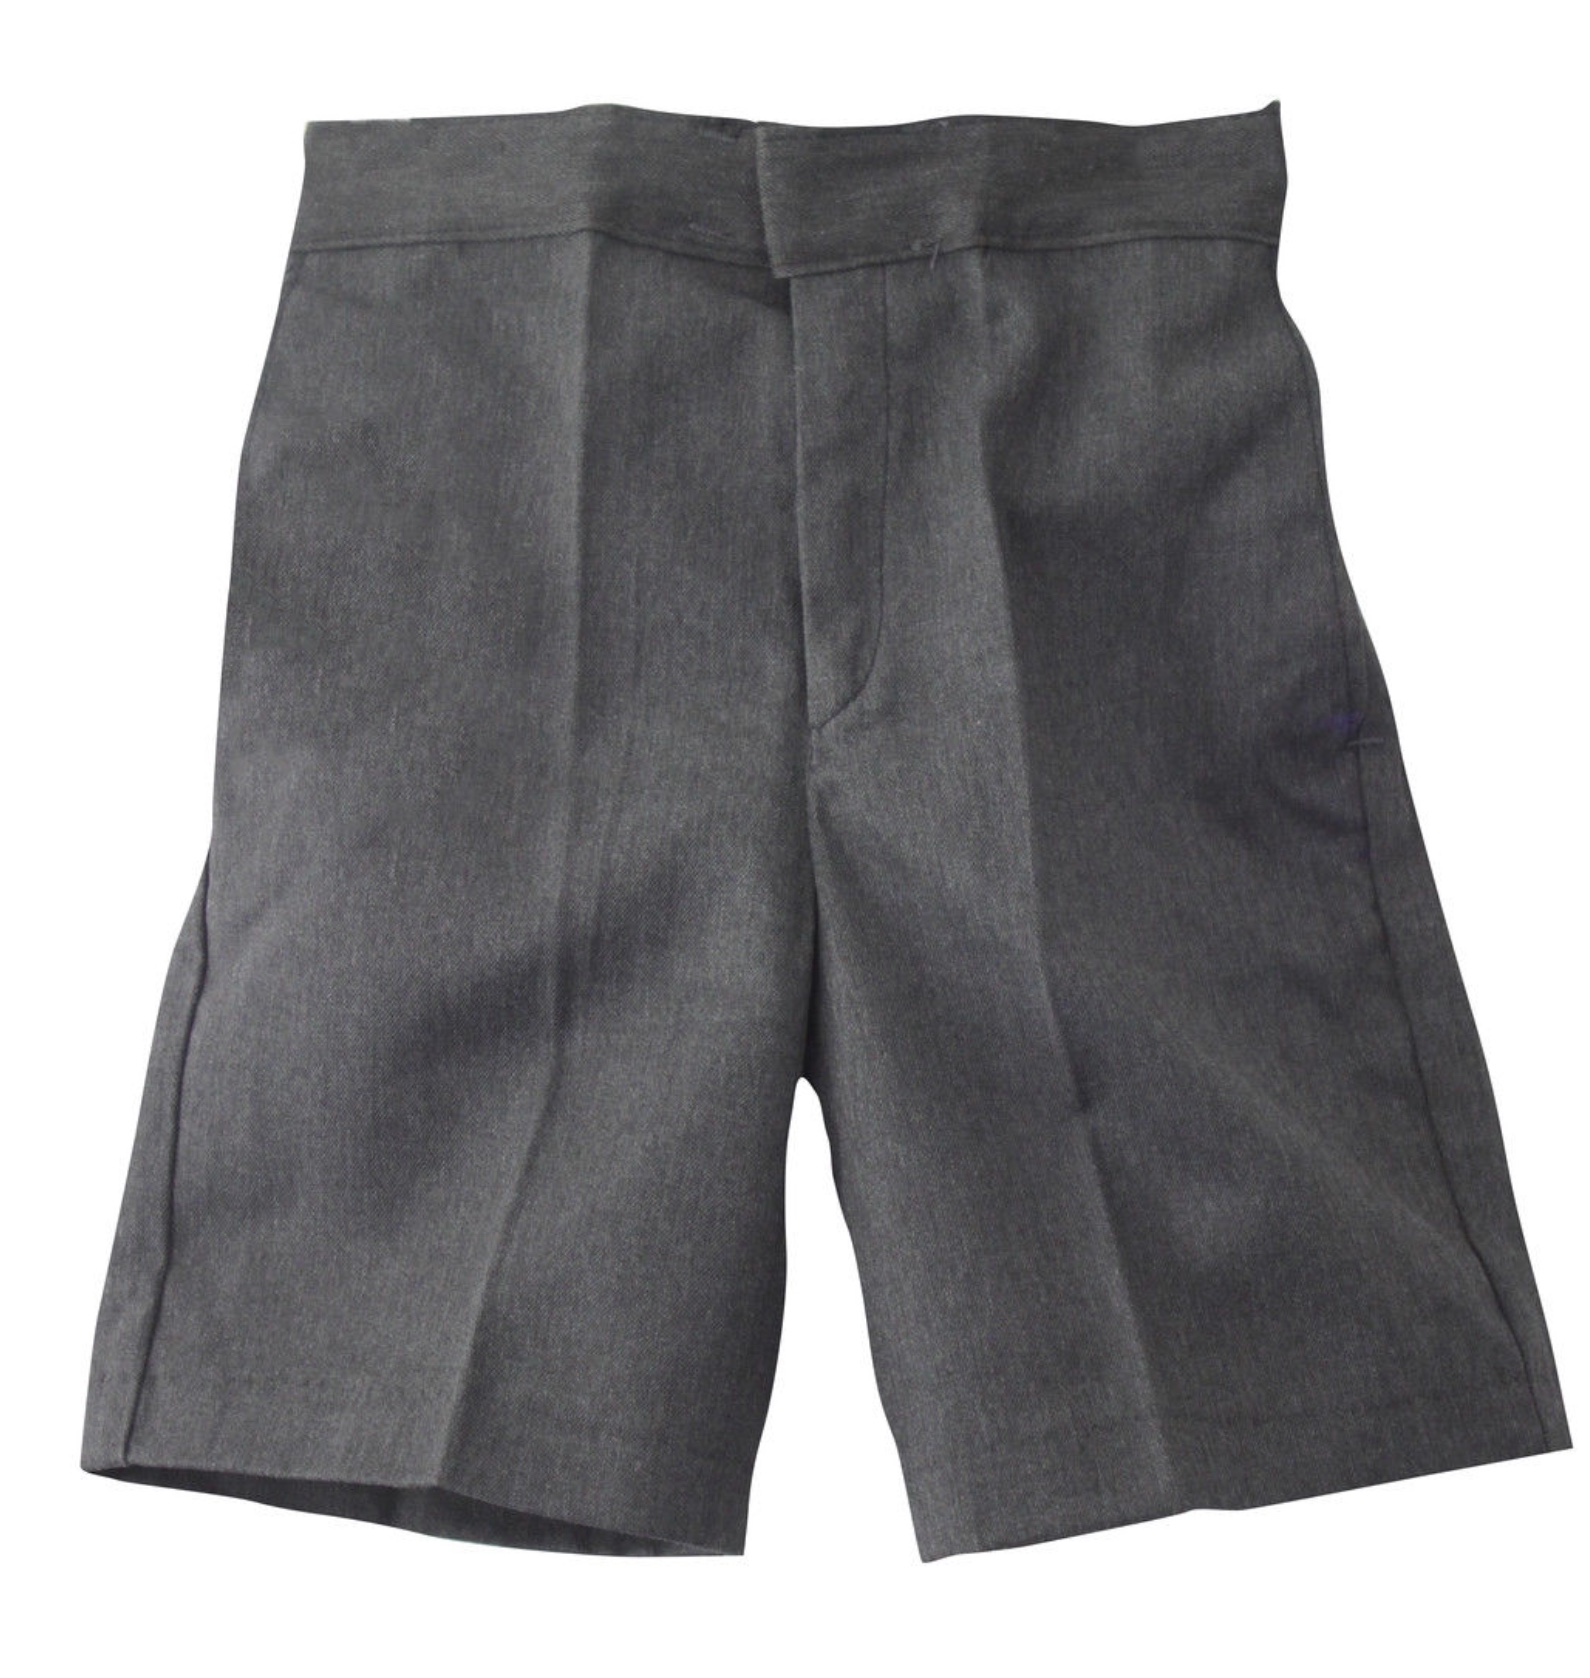 Boys' Dark Grey Shorts, Flat Front, Adjustable Waist, Zip Fly, Side and Back Pockets 11-12 Y